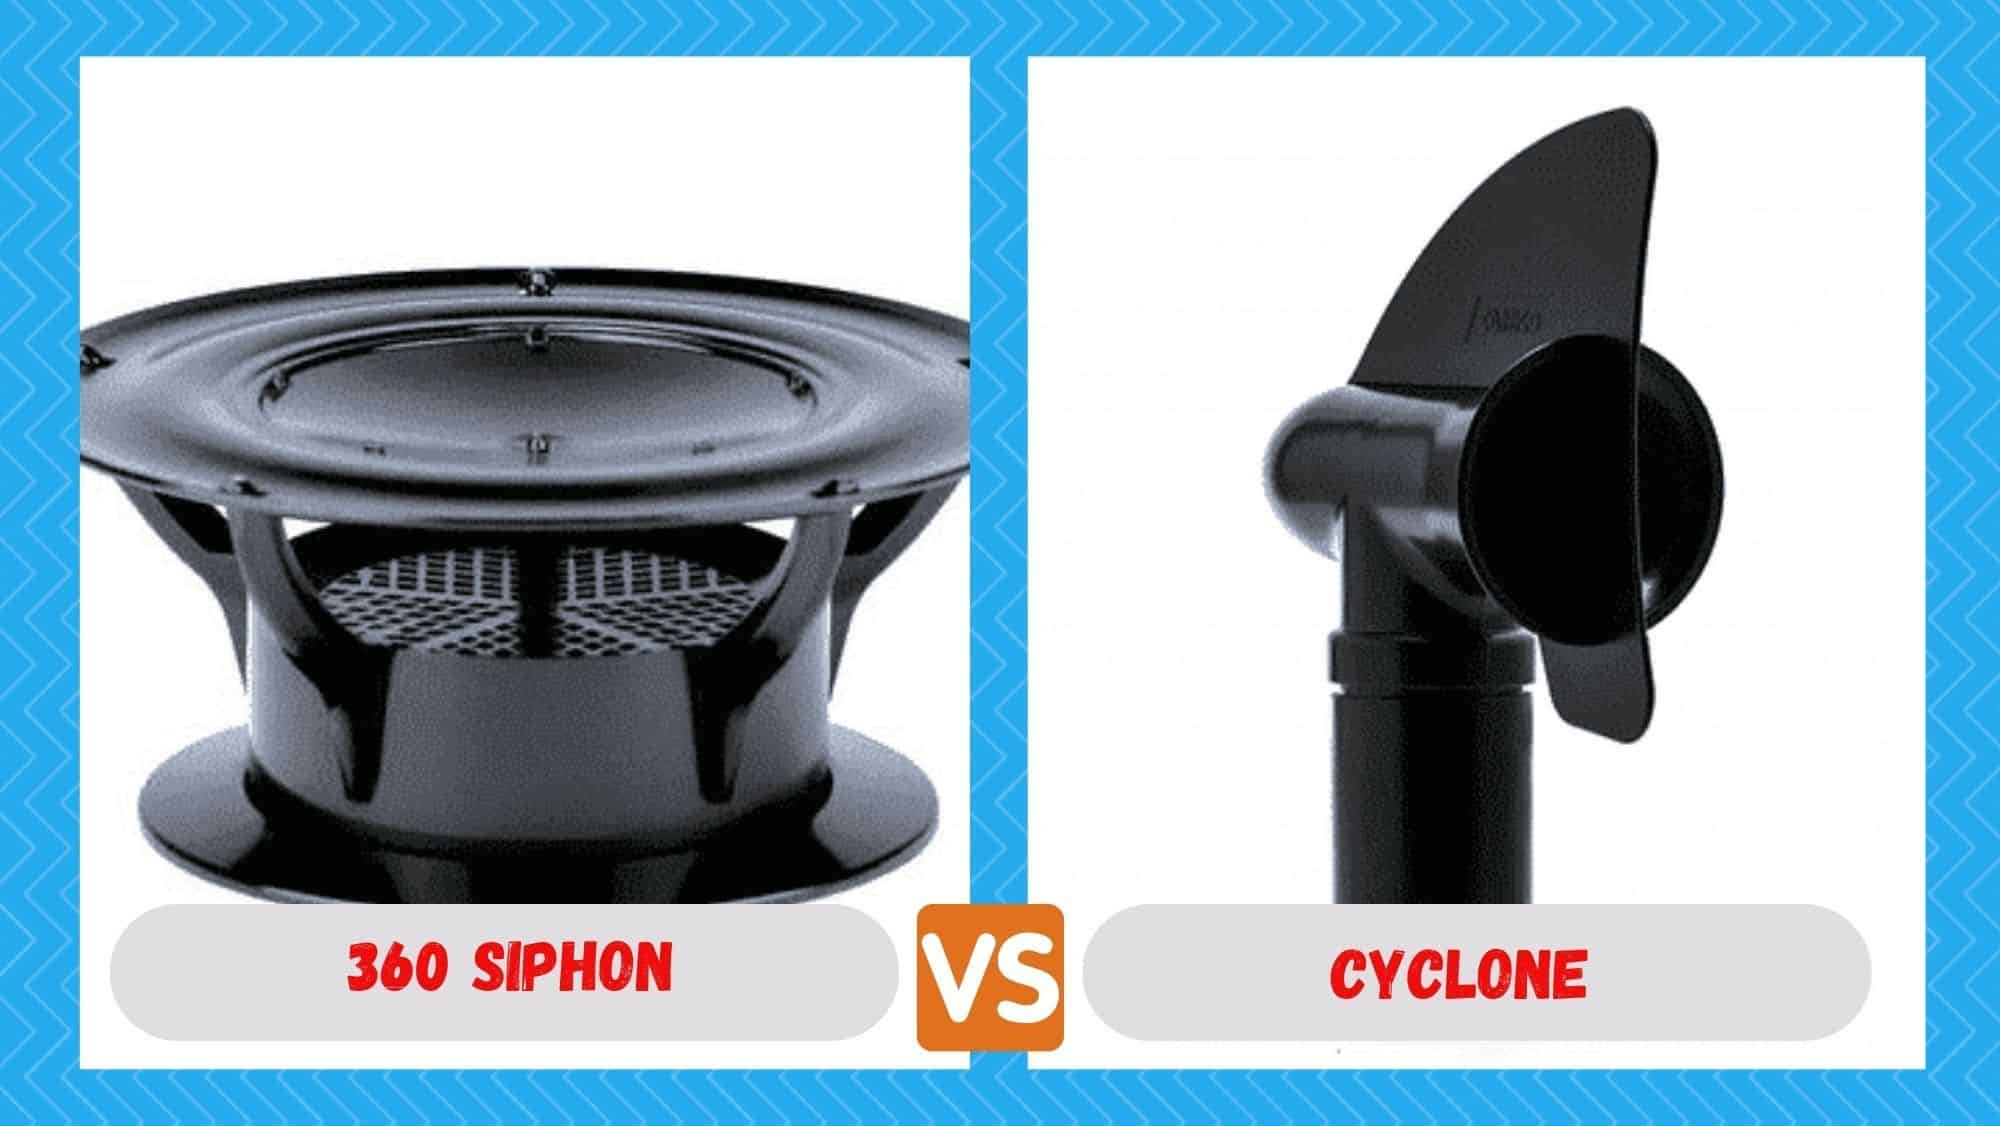 360 siphon vs cyclone